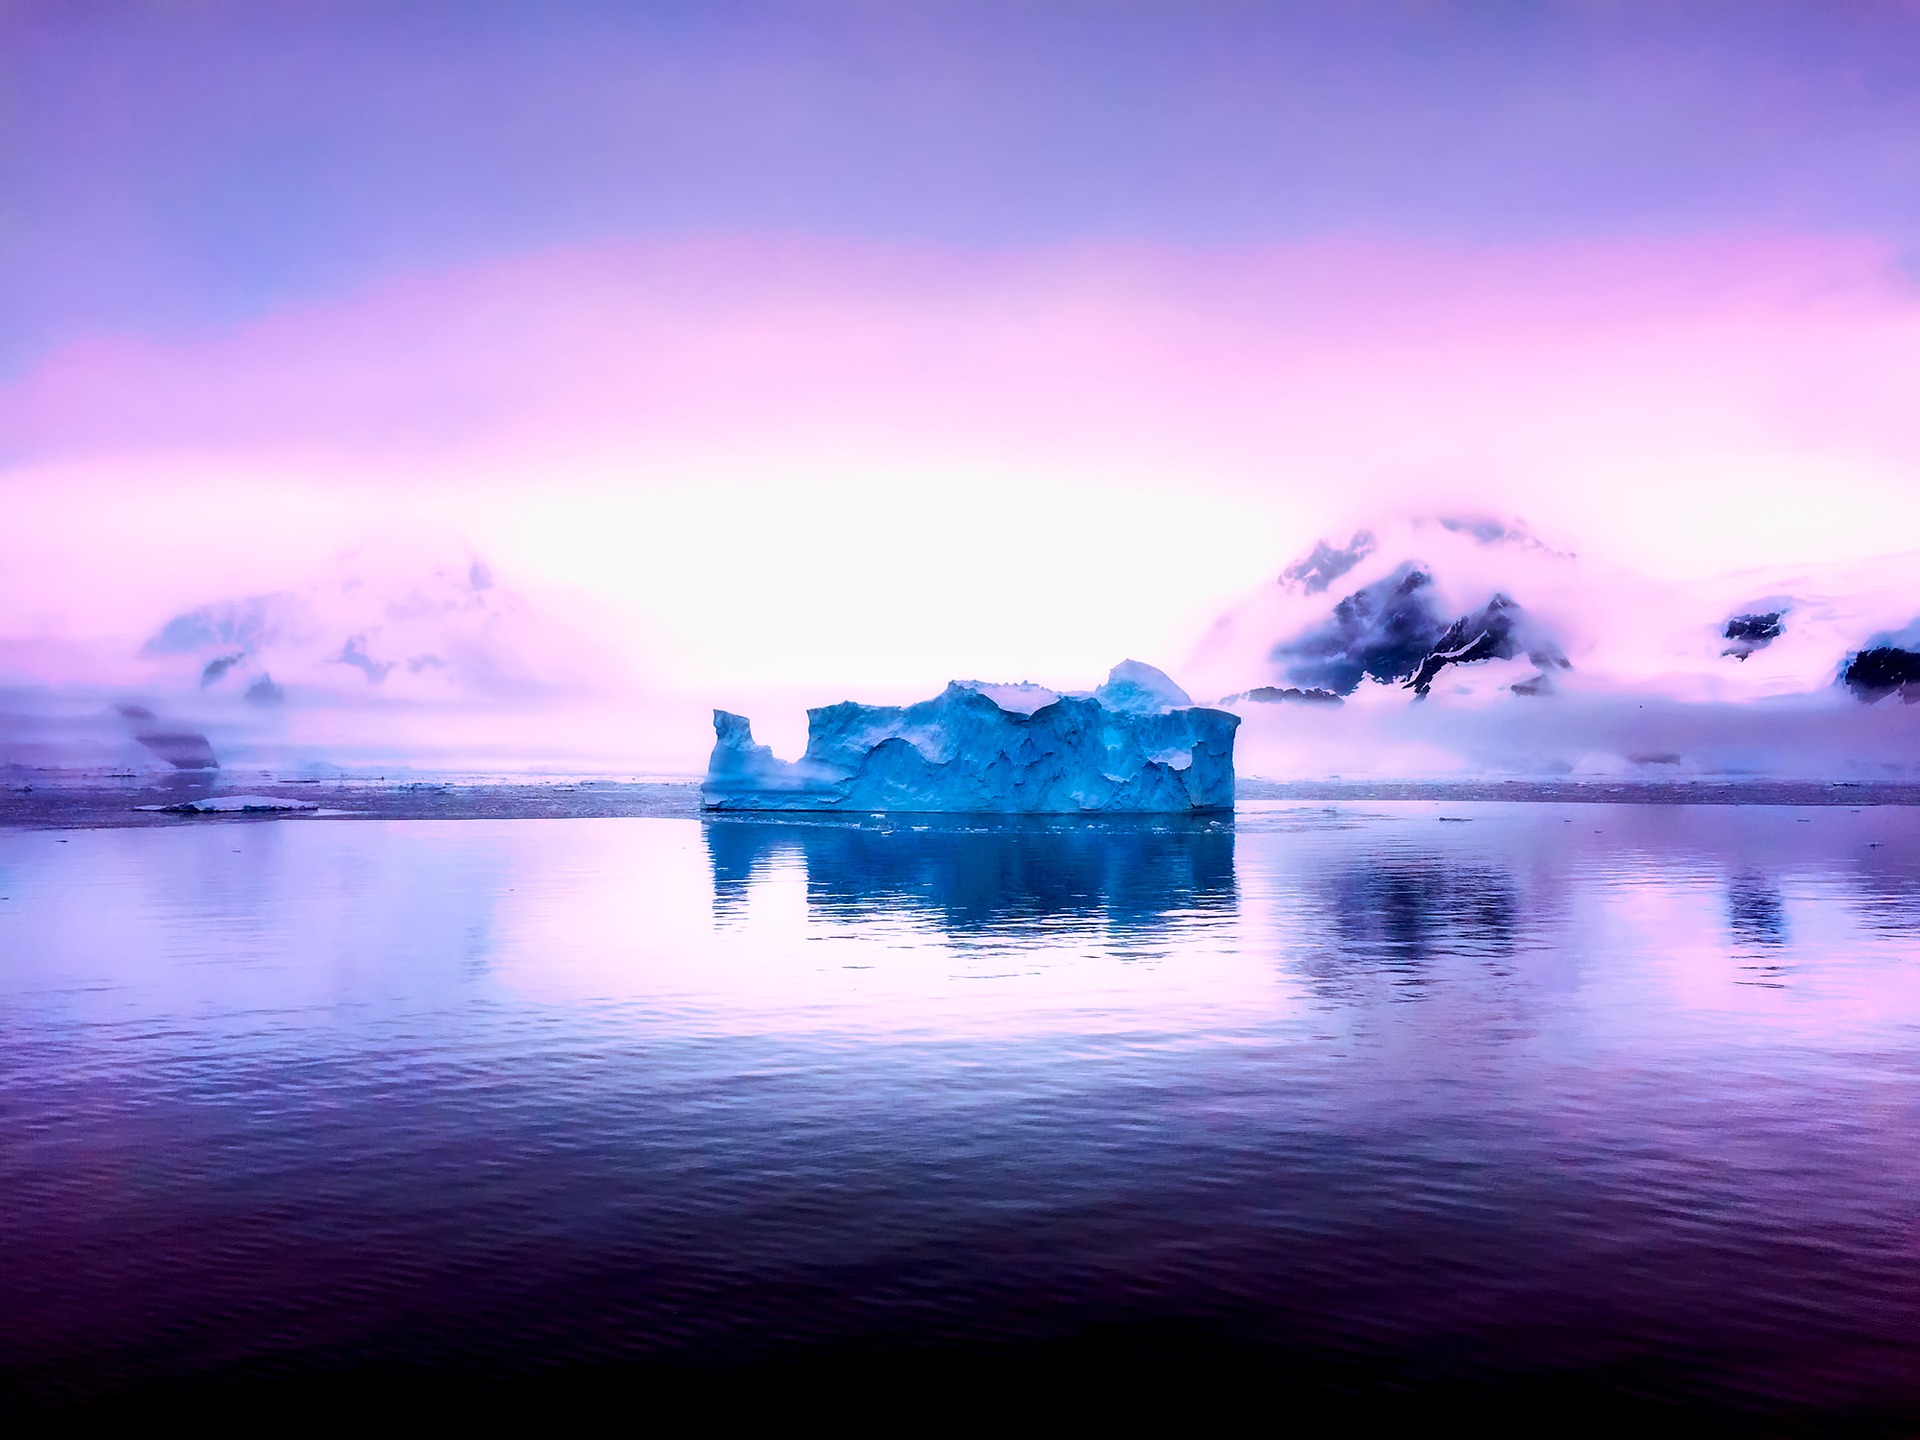 The raw, wild beauty of Antarctica